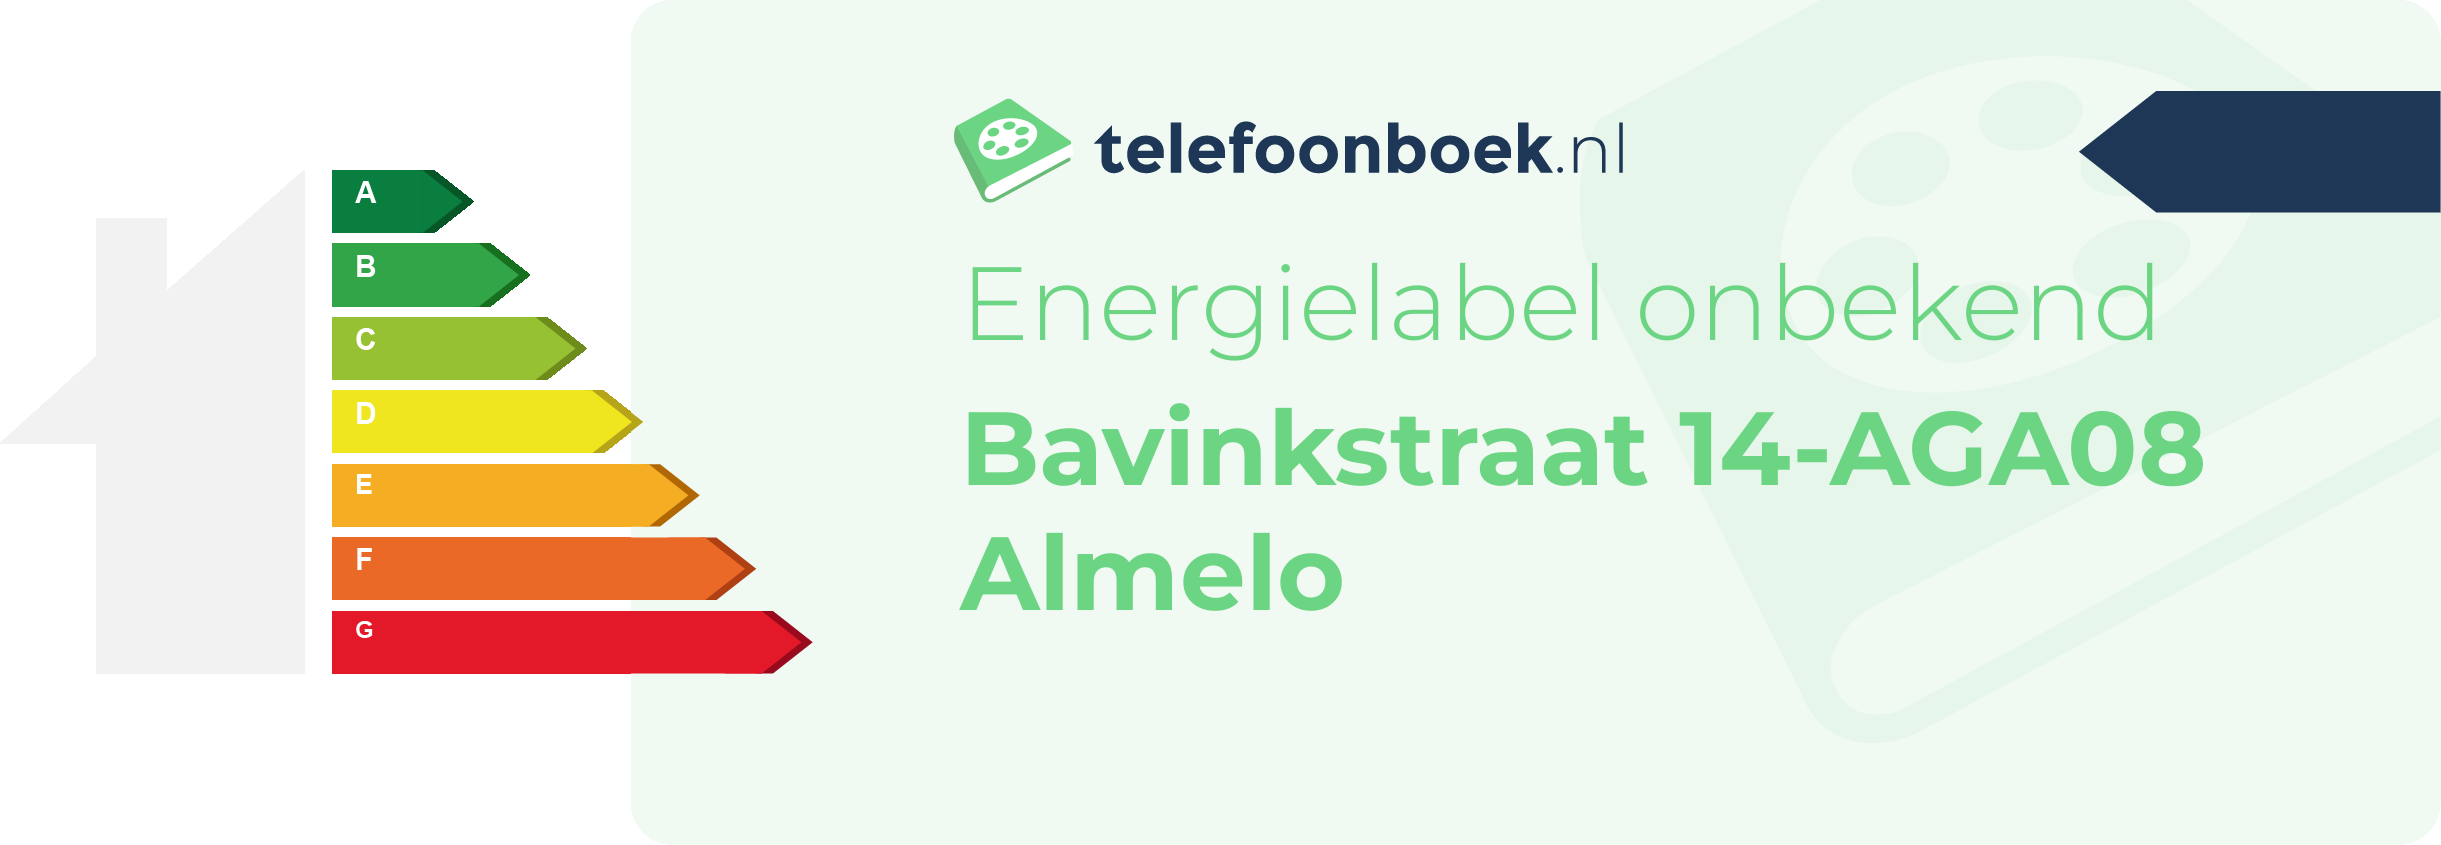 Energielabel Bavinkstraat 14-AGA08 Almelo